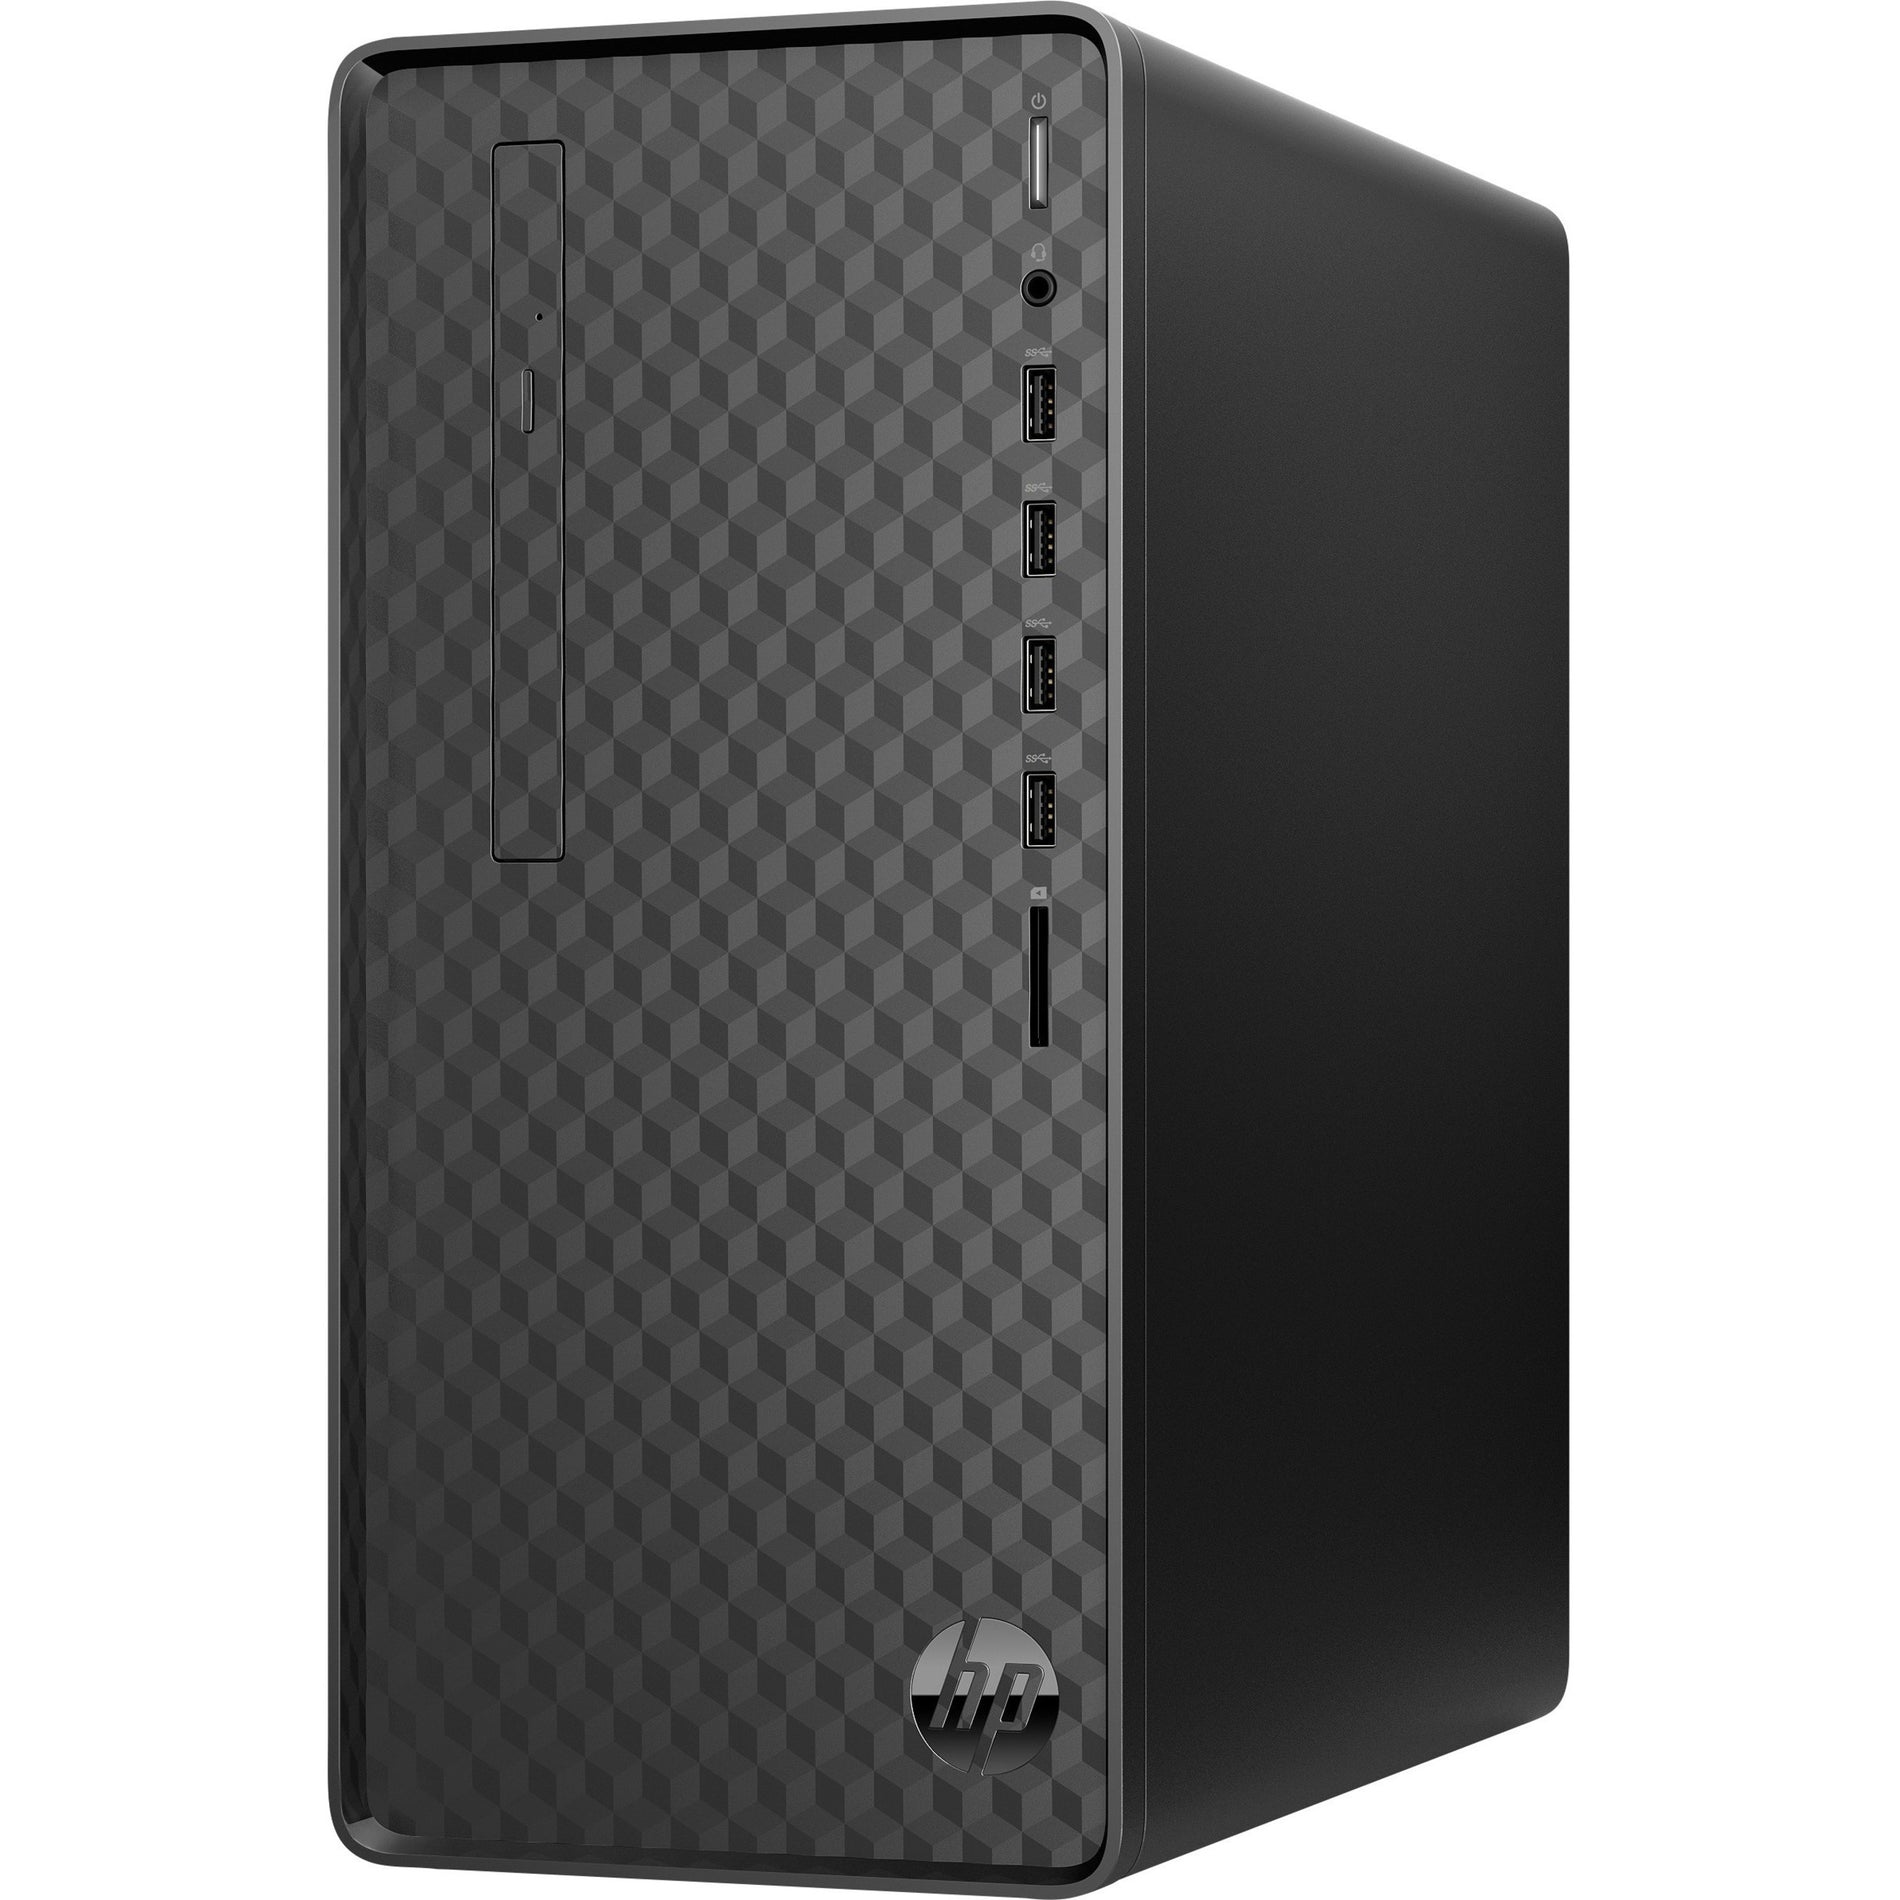 HP M01-F1224 Desktop Computer - AMD Ryzen 5 4600G Hexa-core (6 Core) 3.70 GHz, 12 GB RAM, 512 GB SSD, Refurbished